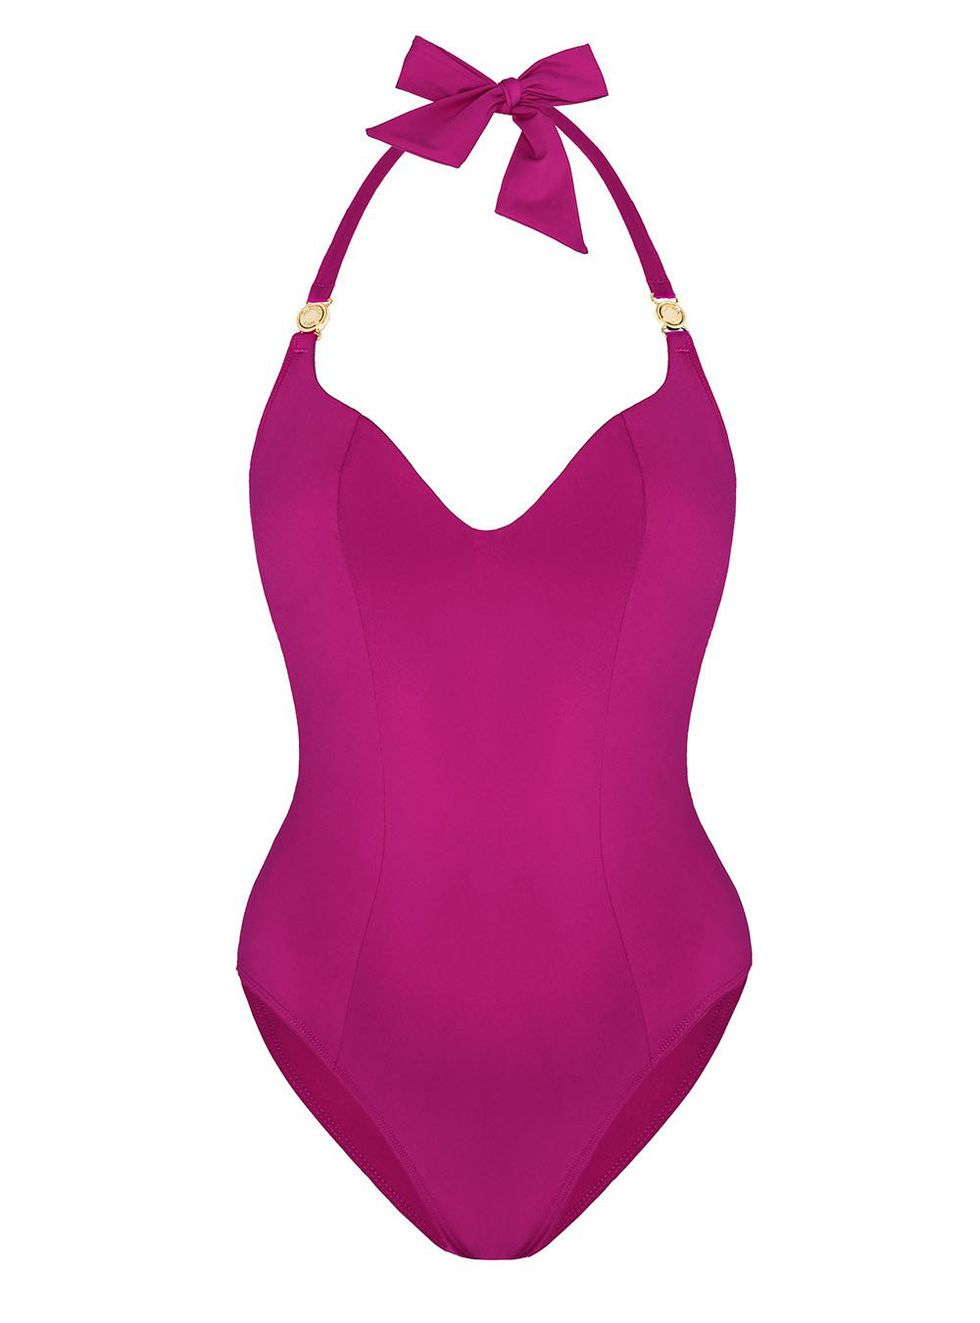 One-piece swimsuit, Clothing, Leotard, Swimwear, Maillot, Swimsuit bottom, Monokini, Purple, Magenta, Pink, 